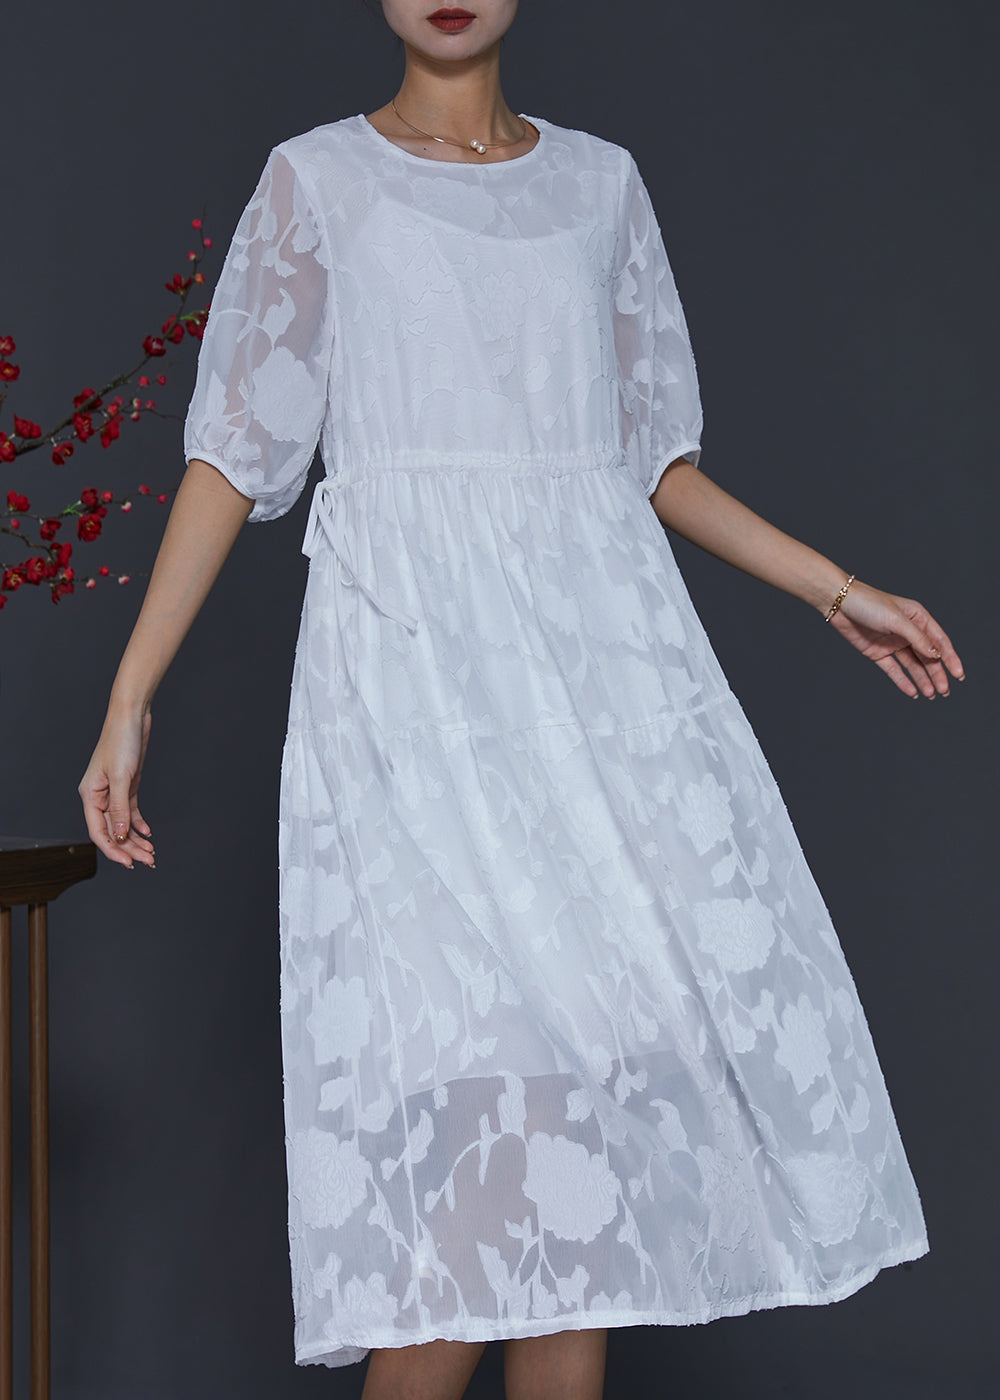 White Jacquard Chiffon Holiday Dress Draping Summer